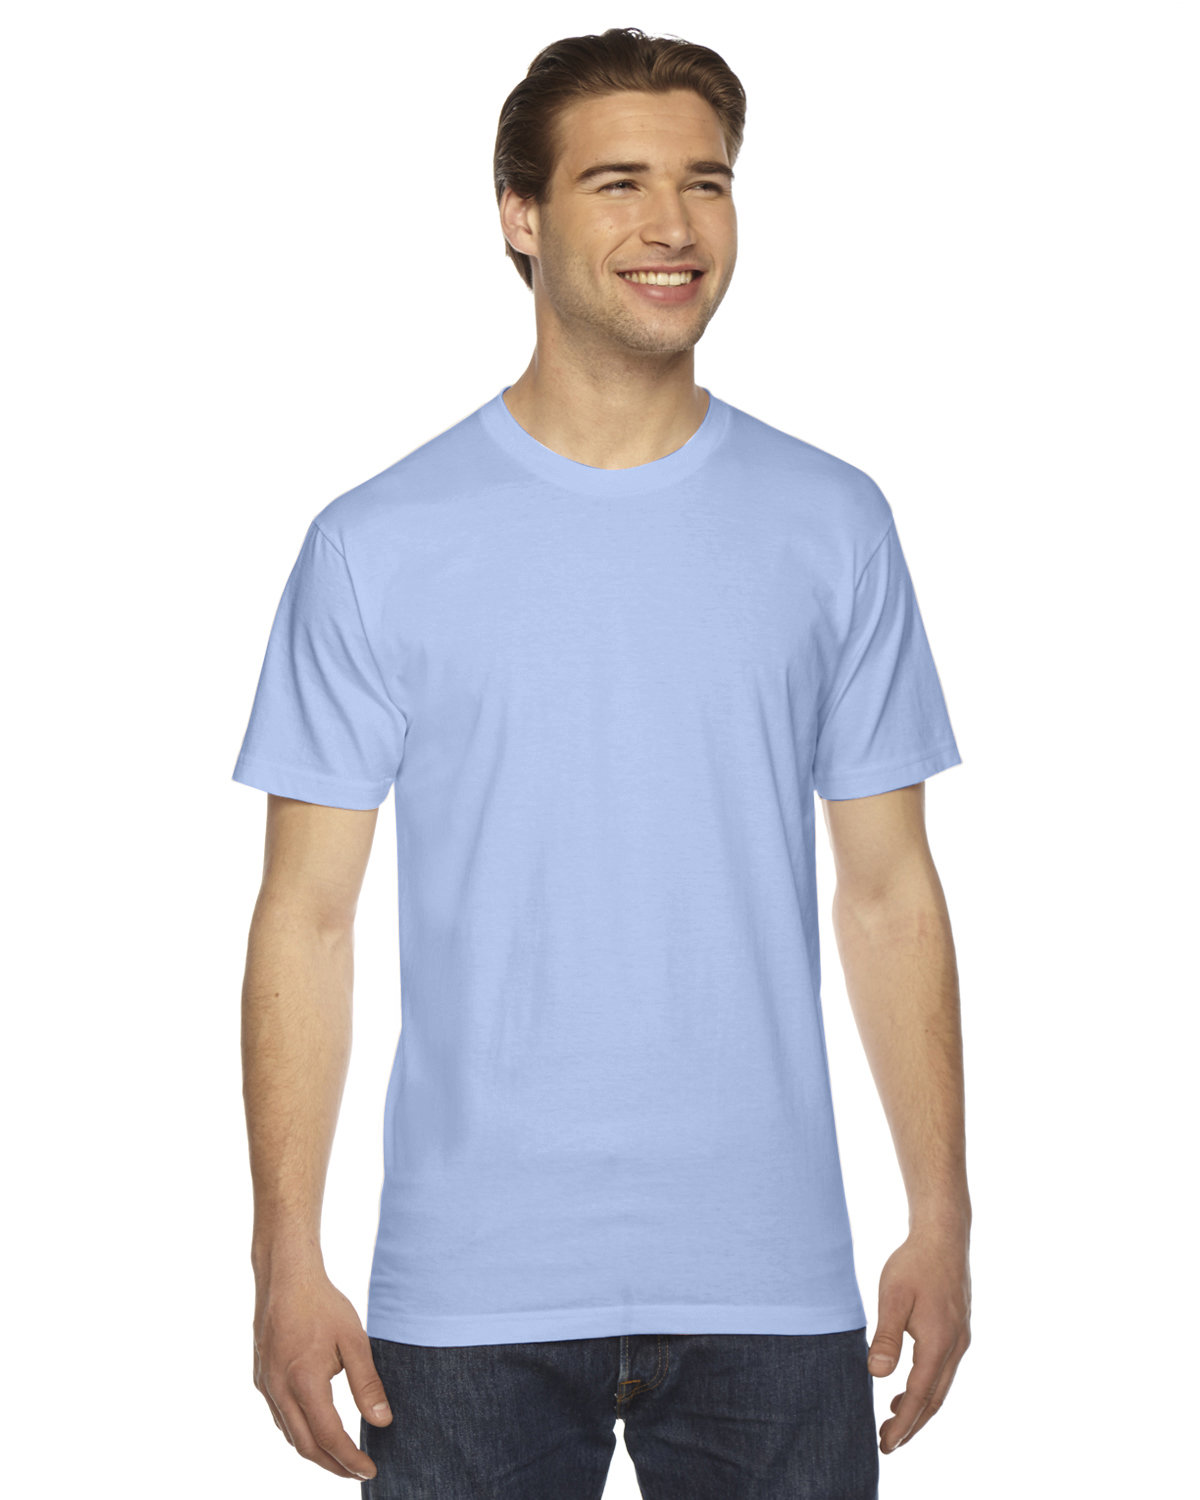 American Apparel Unisex Fine Jersey Short-Sleeve T-Shirt BABY BLUE 